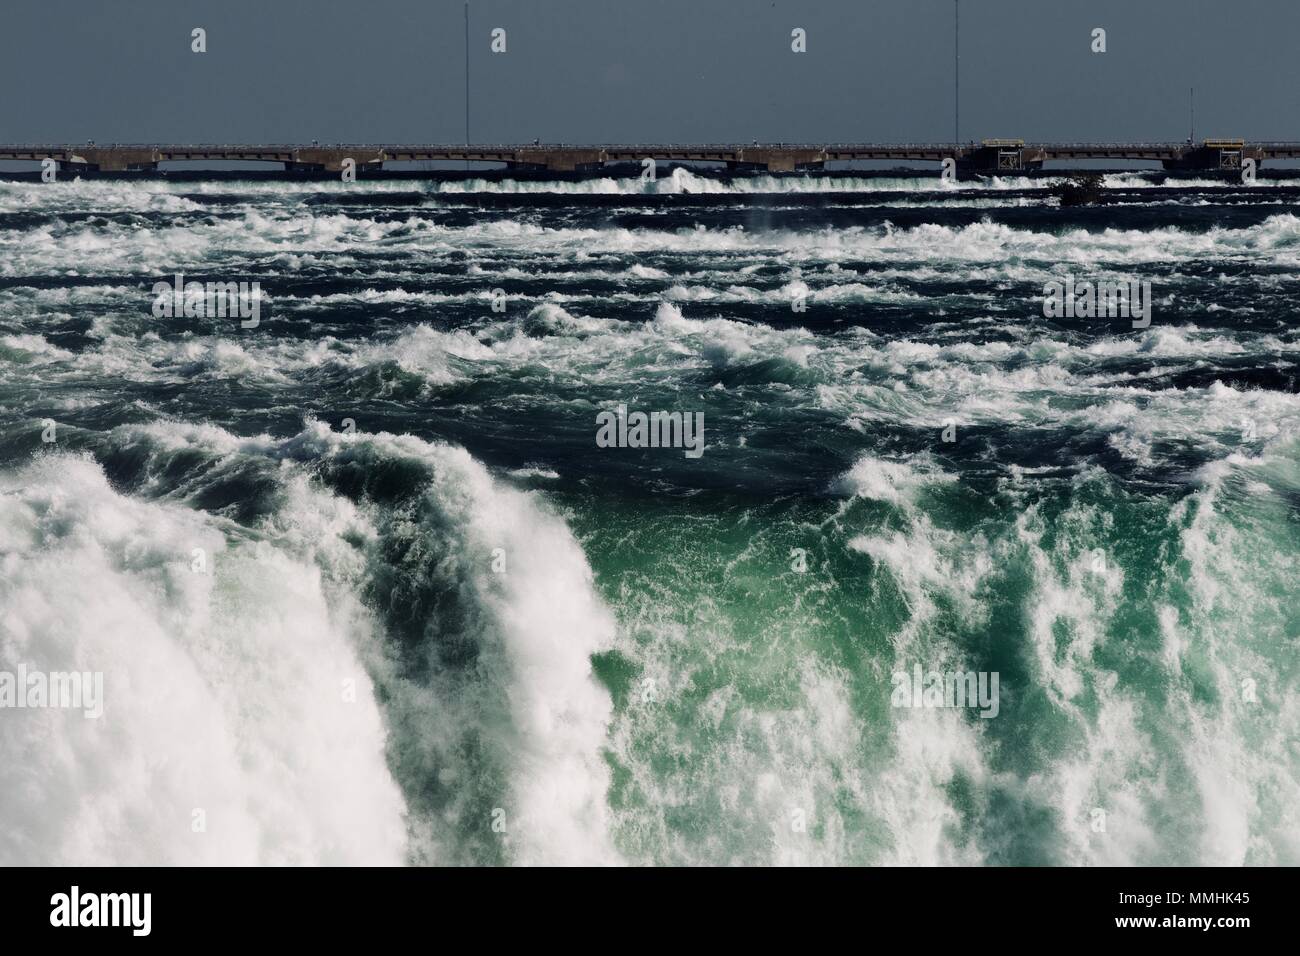 Isolated photo of an amazing Niagara waterfall Stock Photo